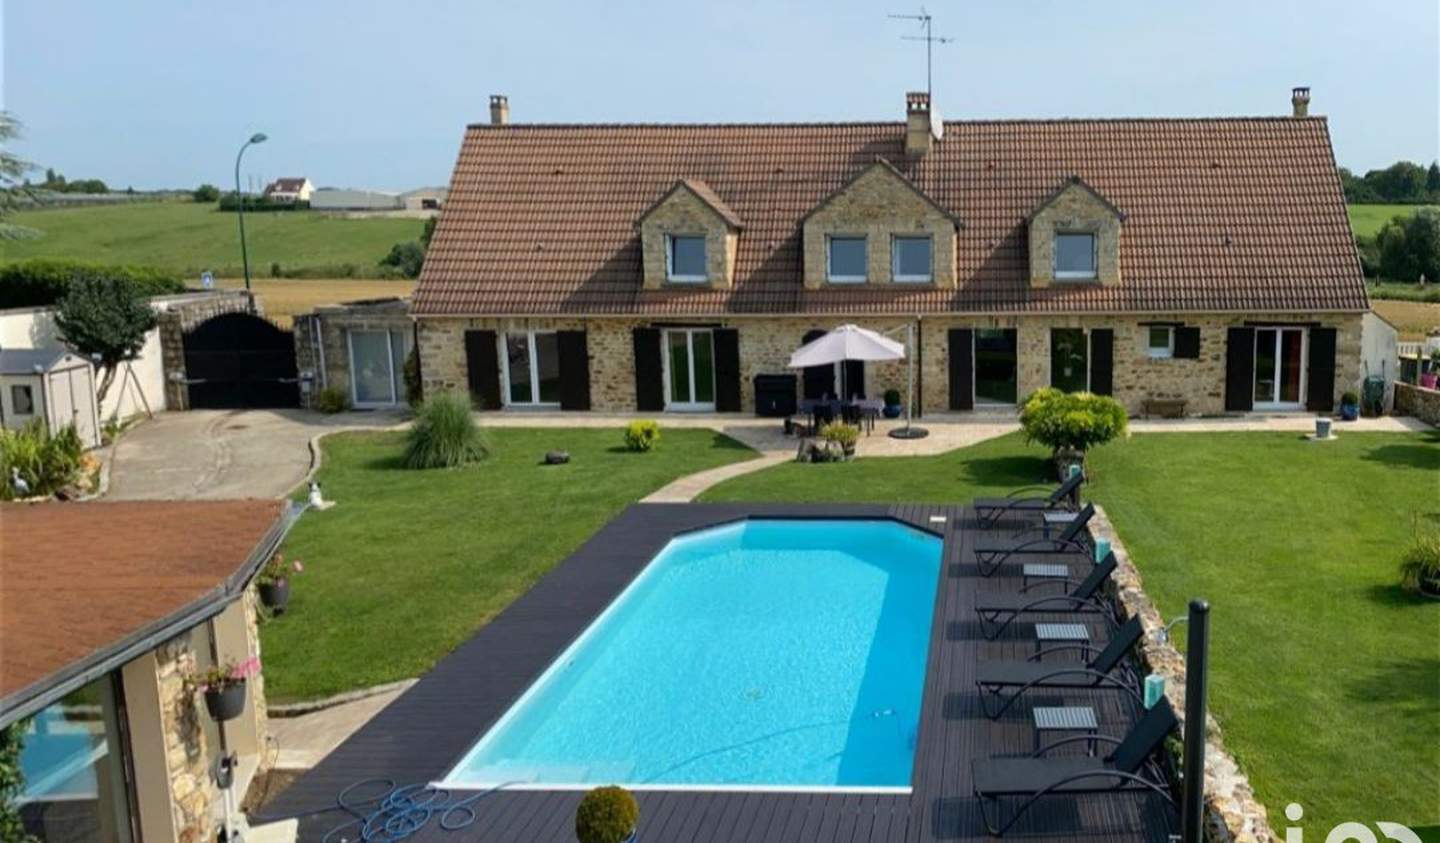 Maison avec piscine et terrasse Presles-en-Brie